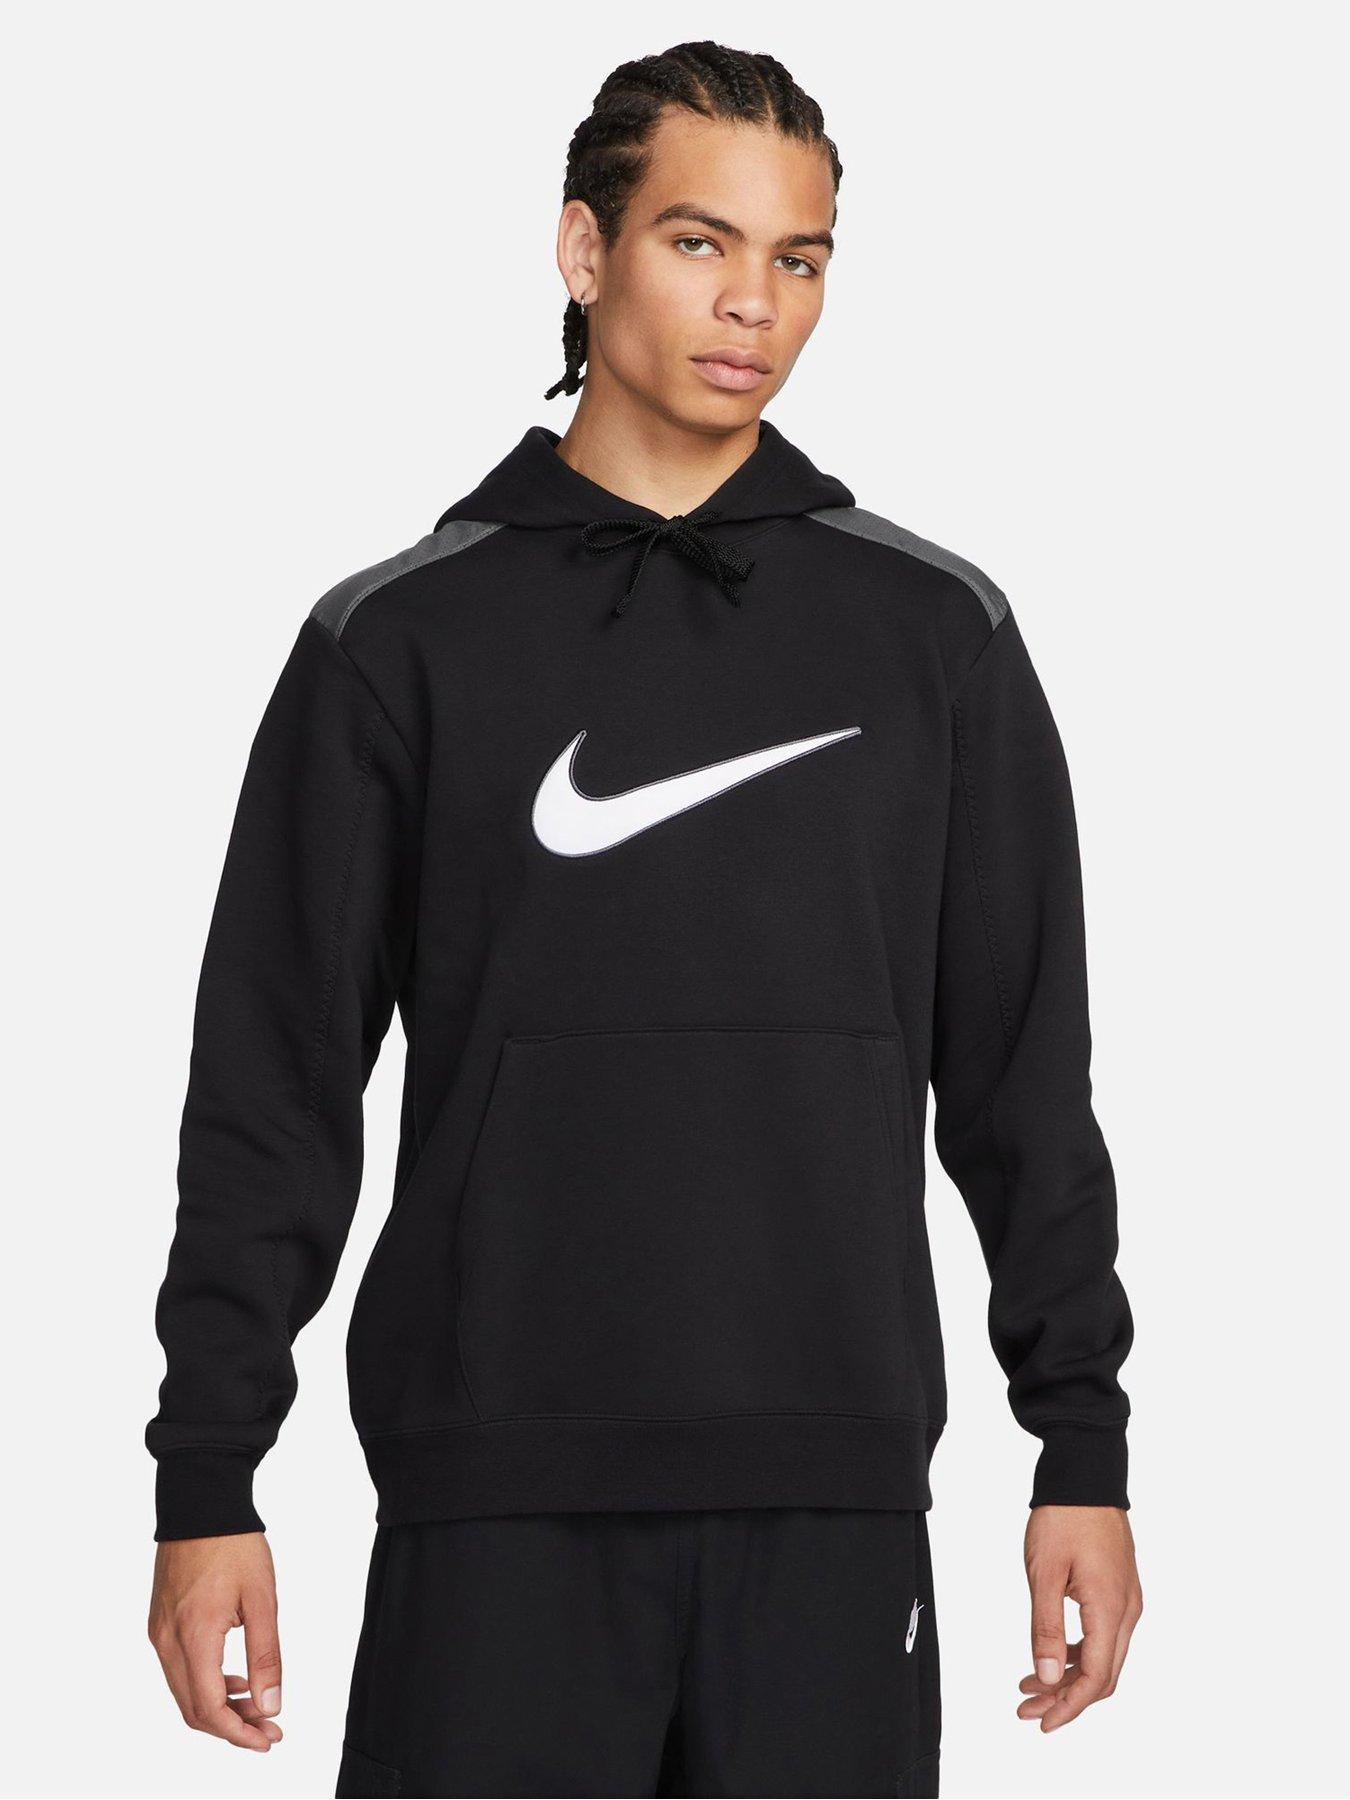 XXL, Hoodies & sweatshirts, Men, Nike